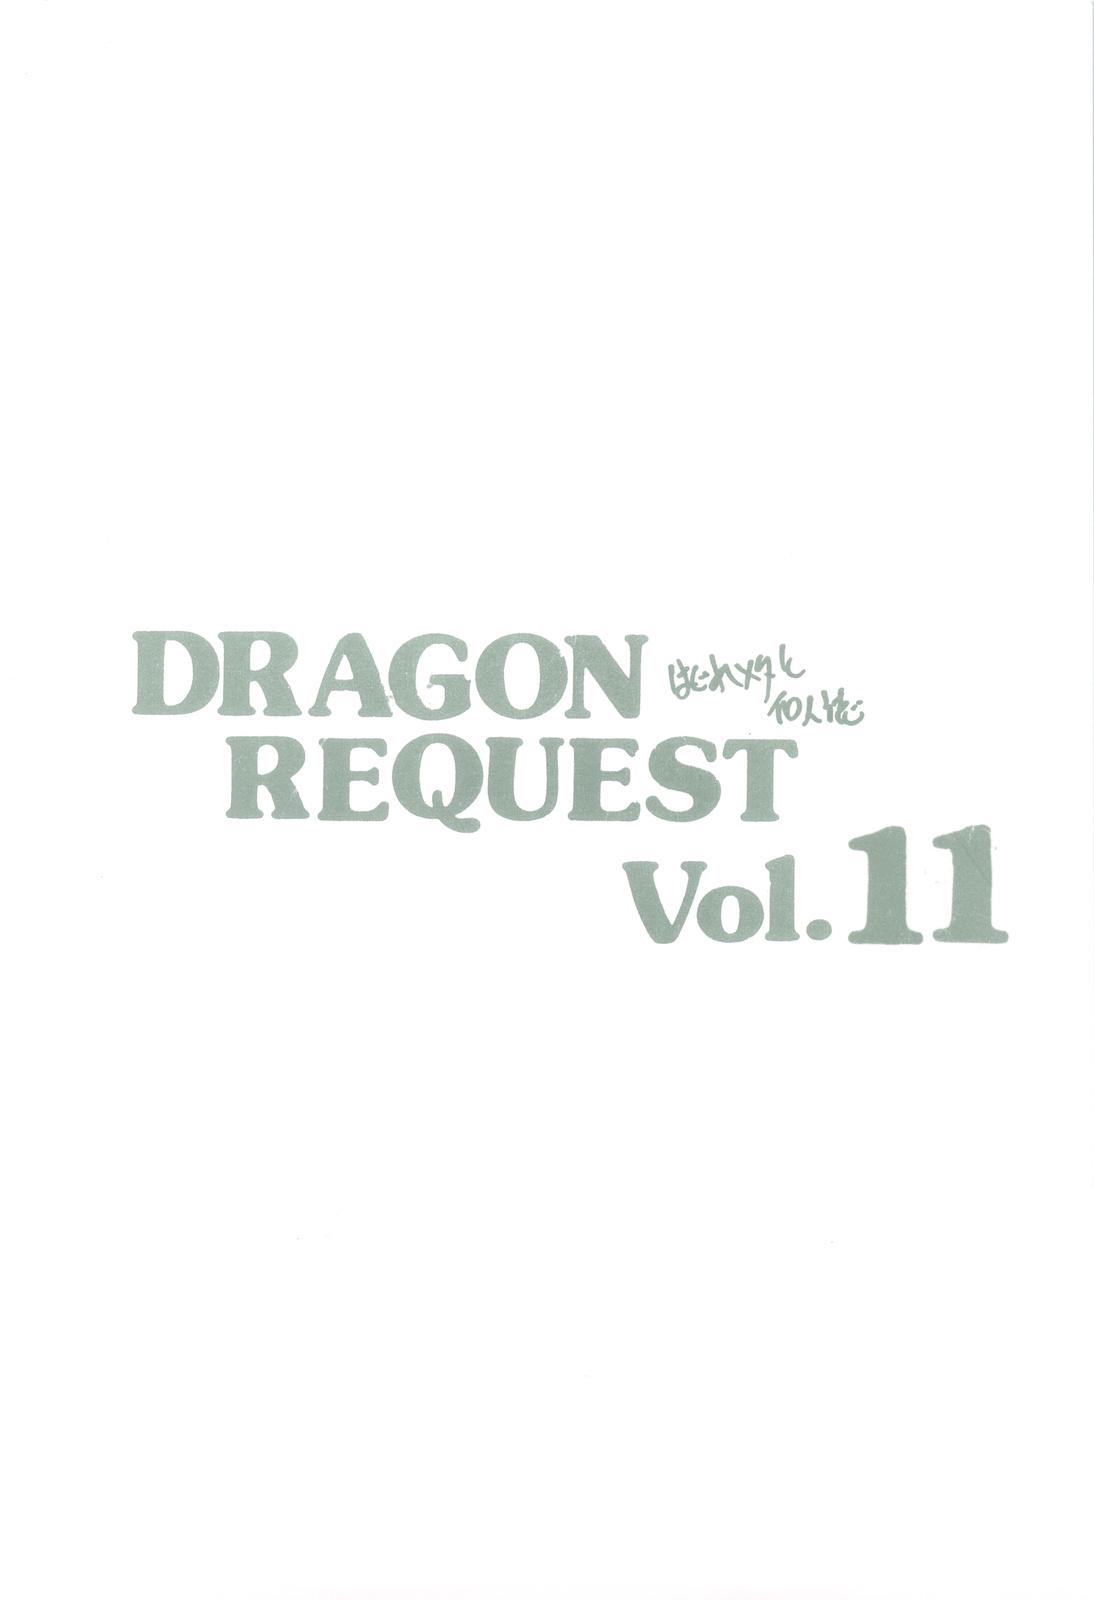 Boss DRAGON REQUEST Vol. 11 - Dragon quest v Raw - Page 16